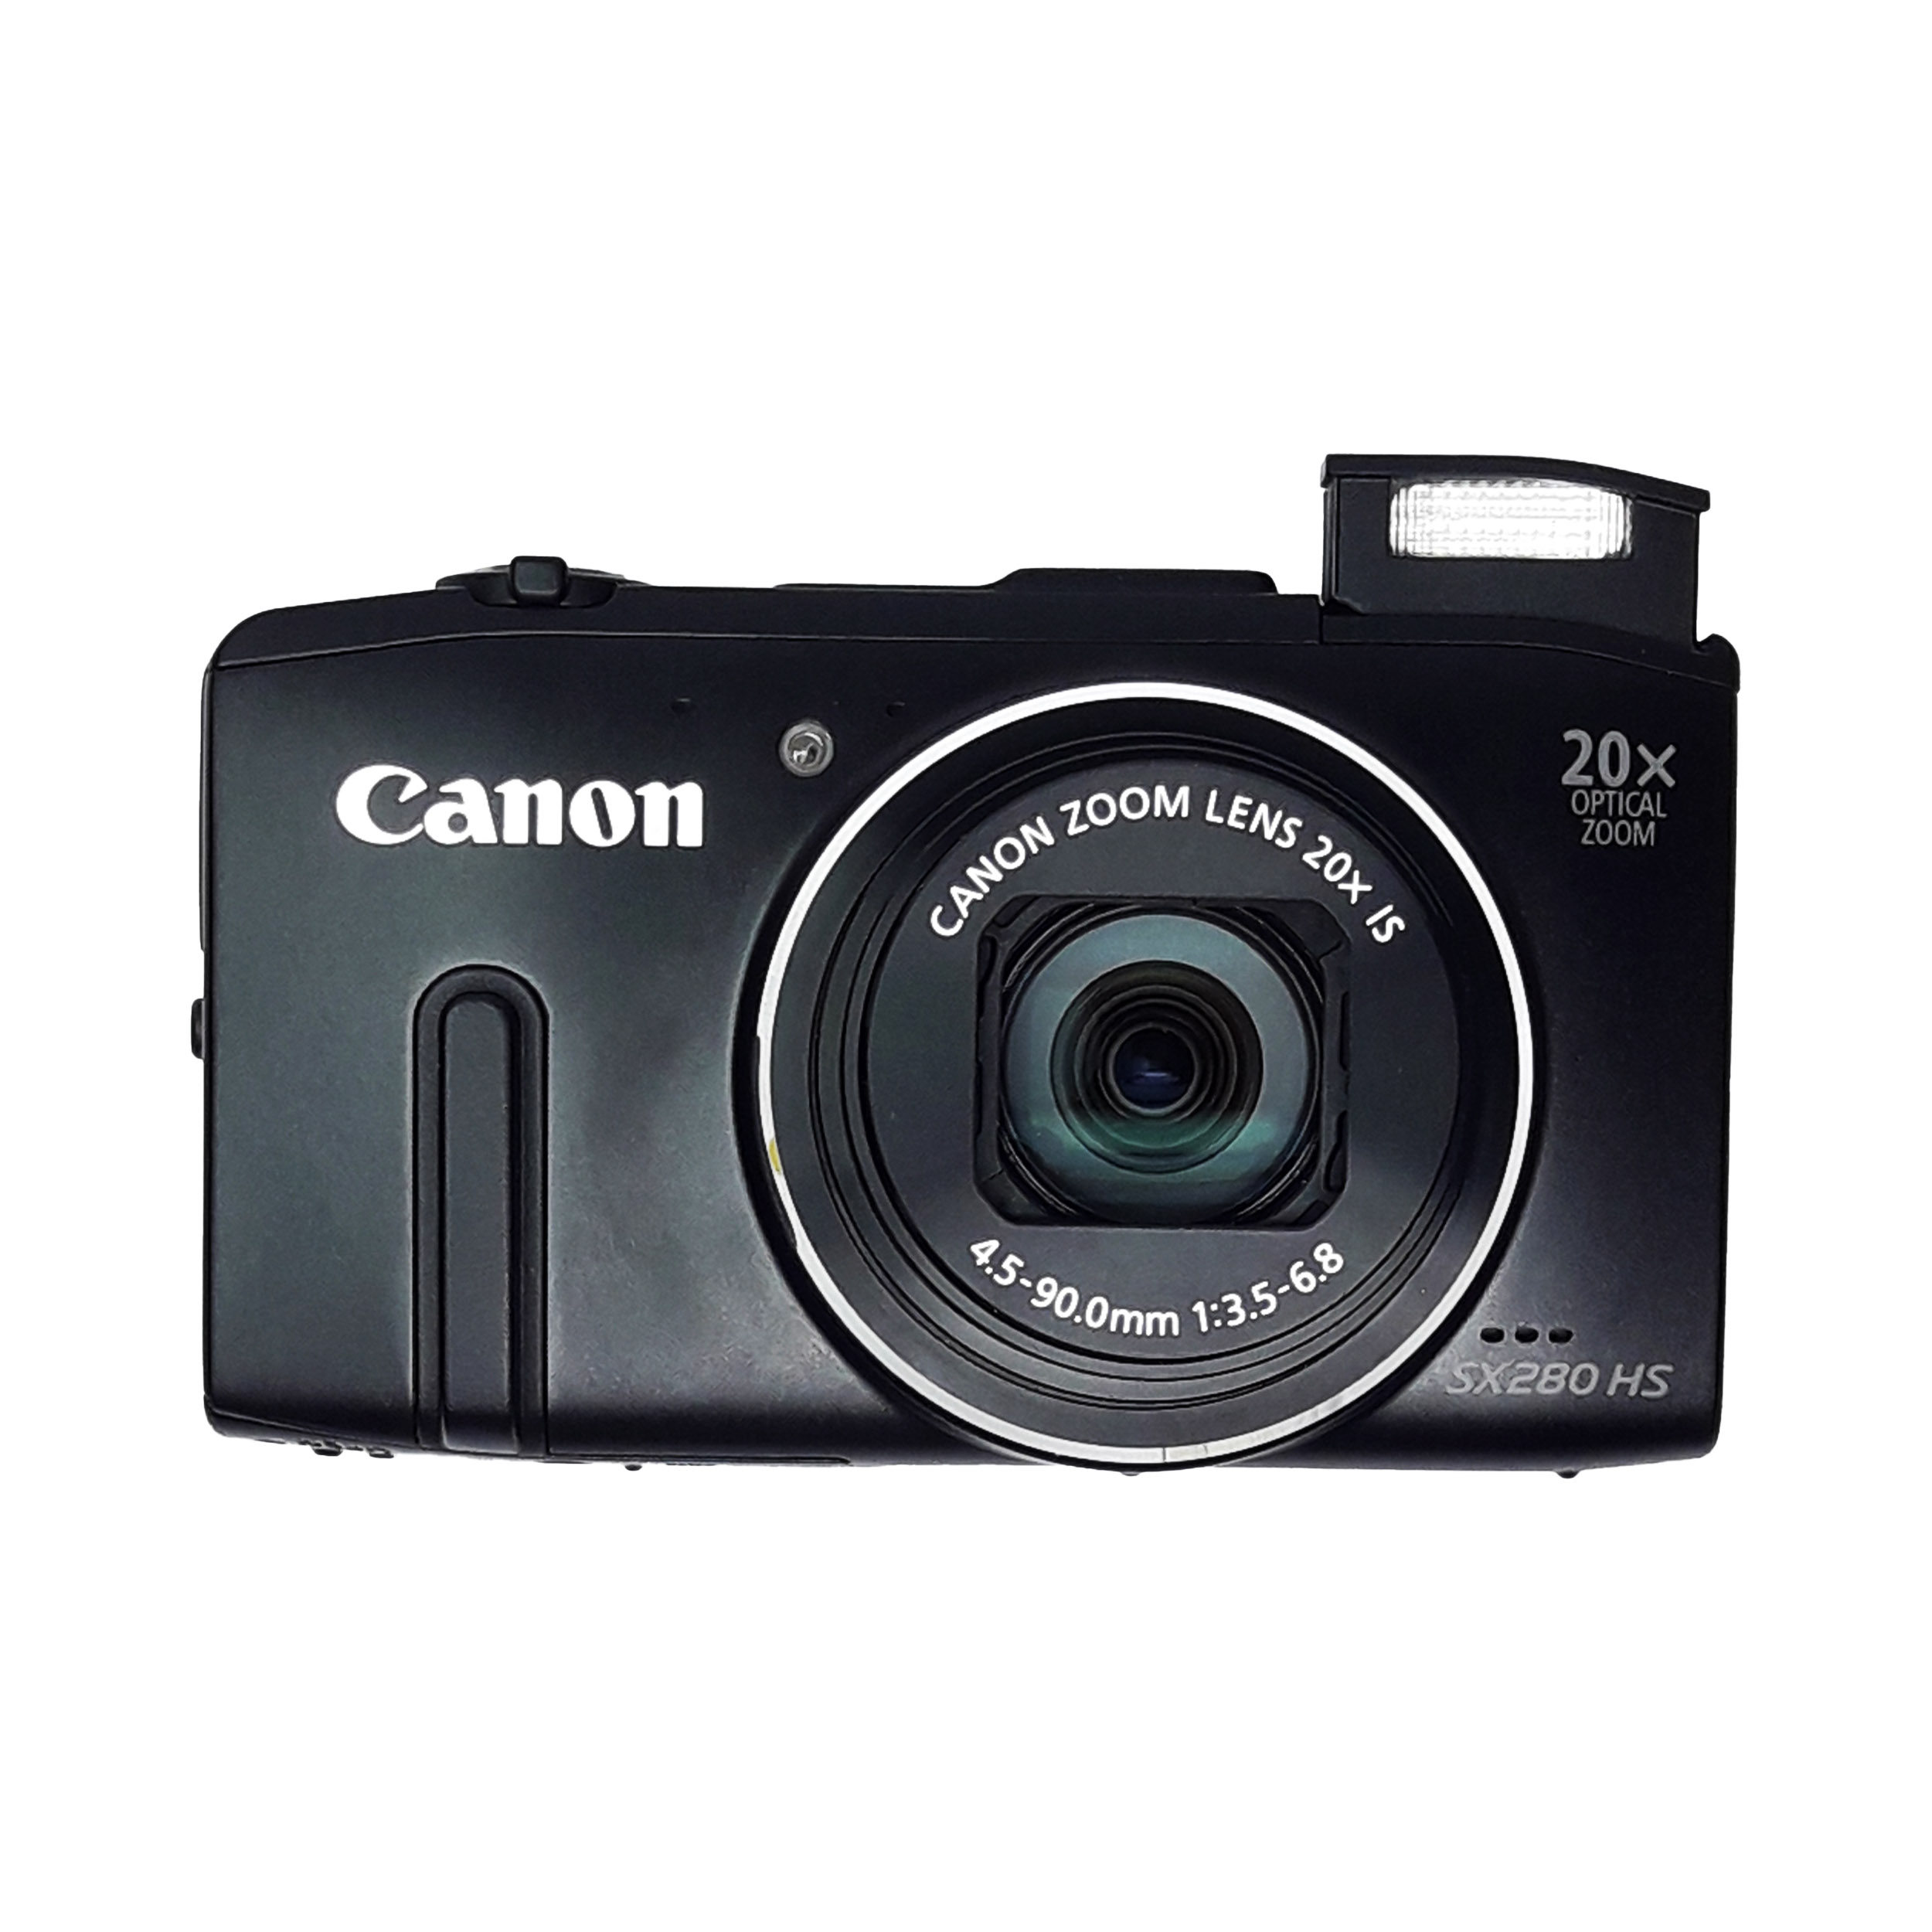  دوربین دیجیتال کانن مدل Powershot SX280 HS